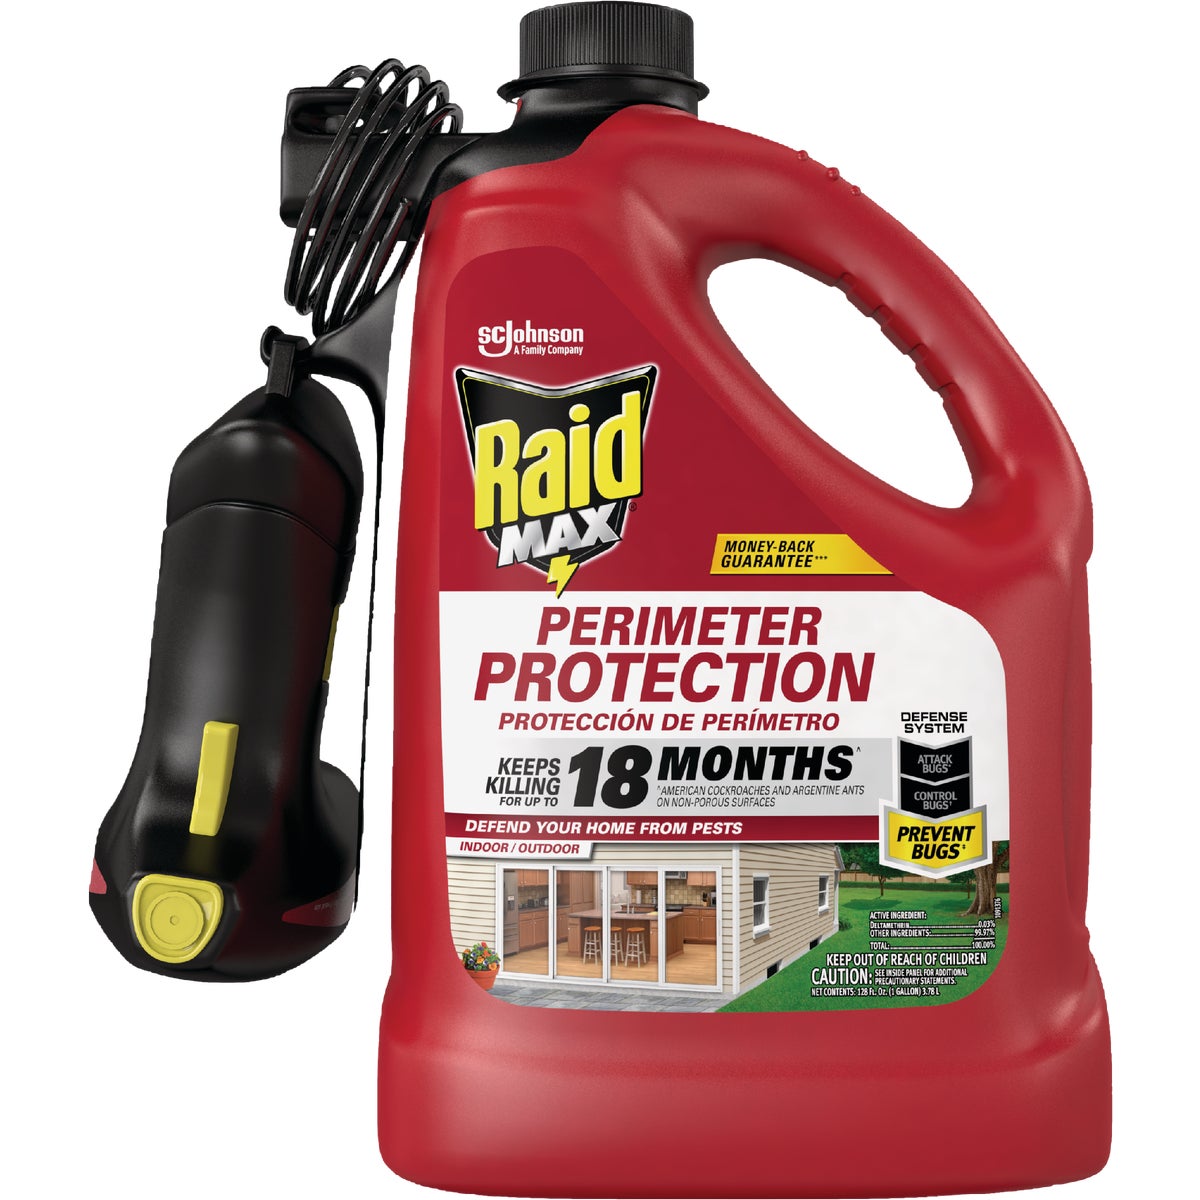 Raid Max Perimeter Protection 1 Gal. Ready To Use Trigger Spray Insect Killer